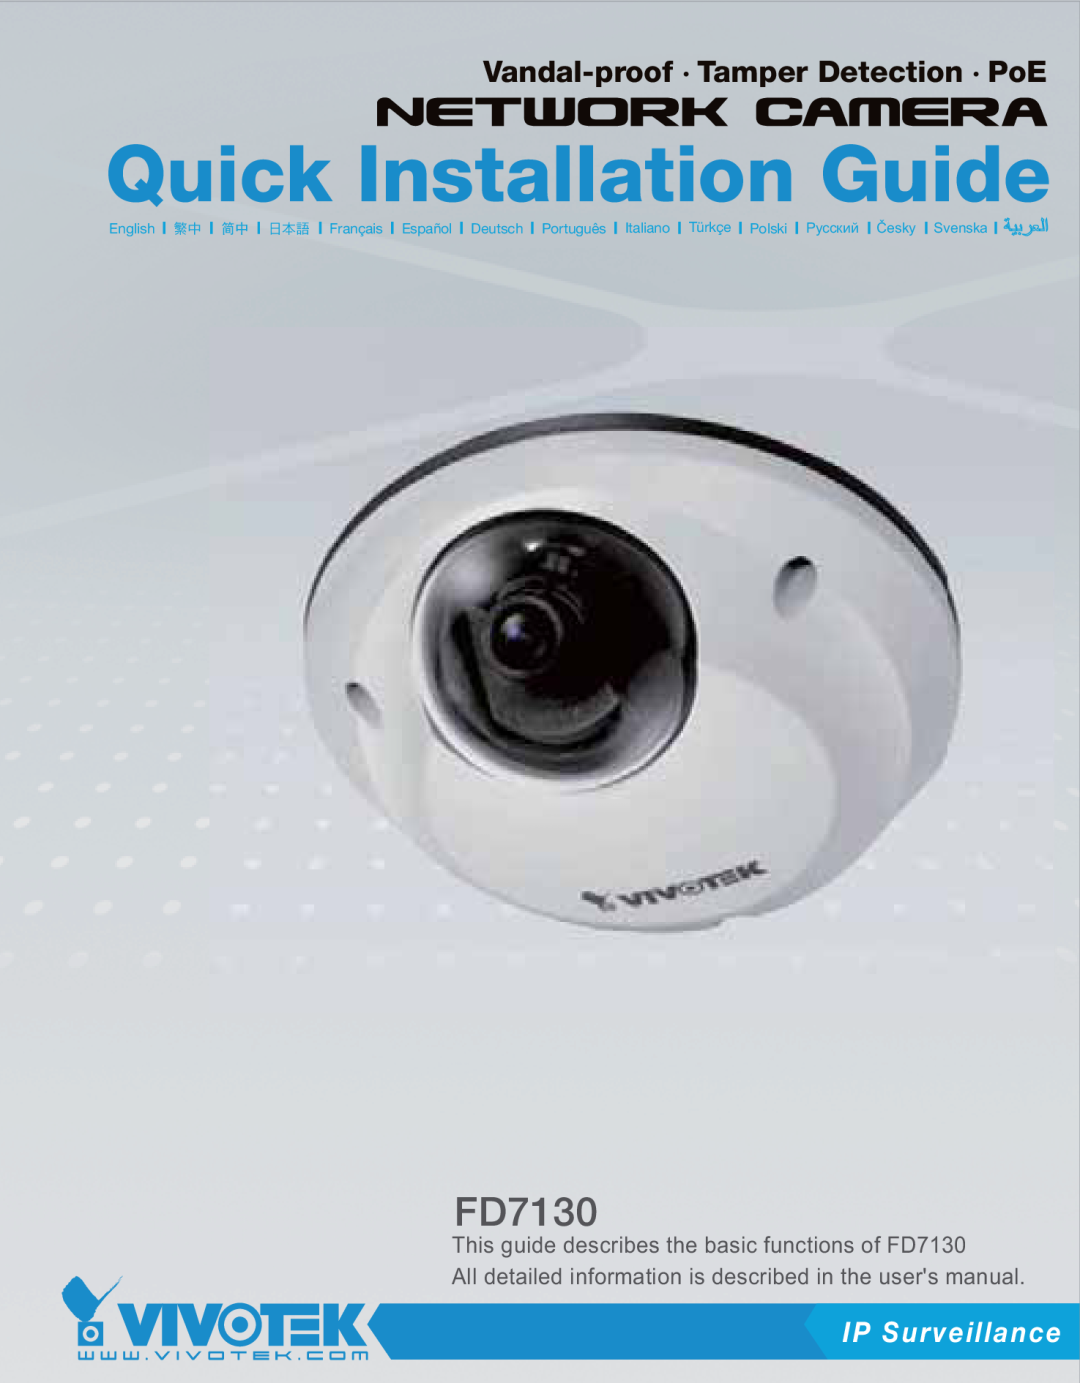 Vivotek FD7130 user manual Quick Installation Guide, Vandal-proof . Tamper Detection . PoE, IP Surveillance, English 